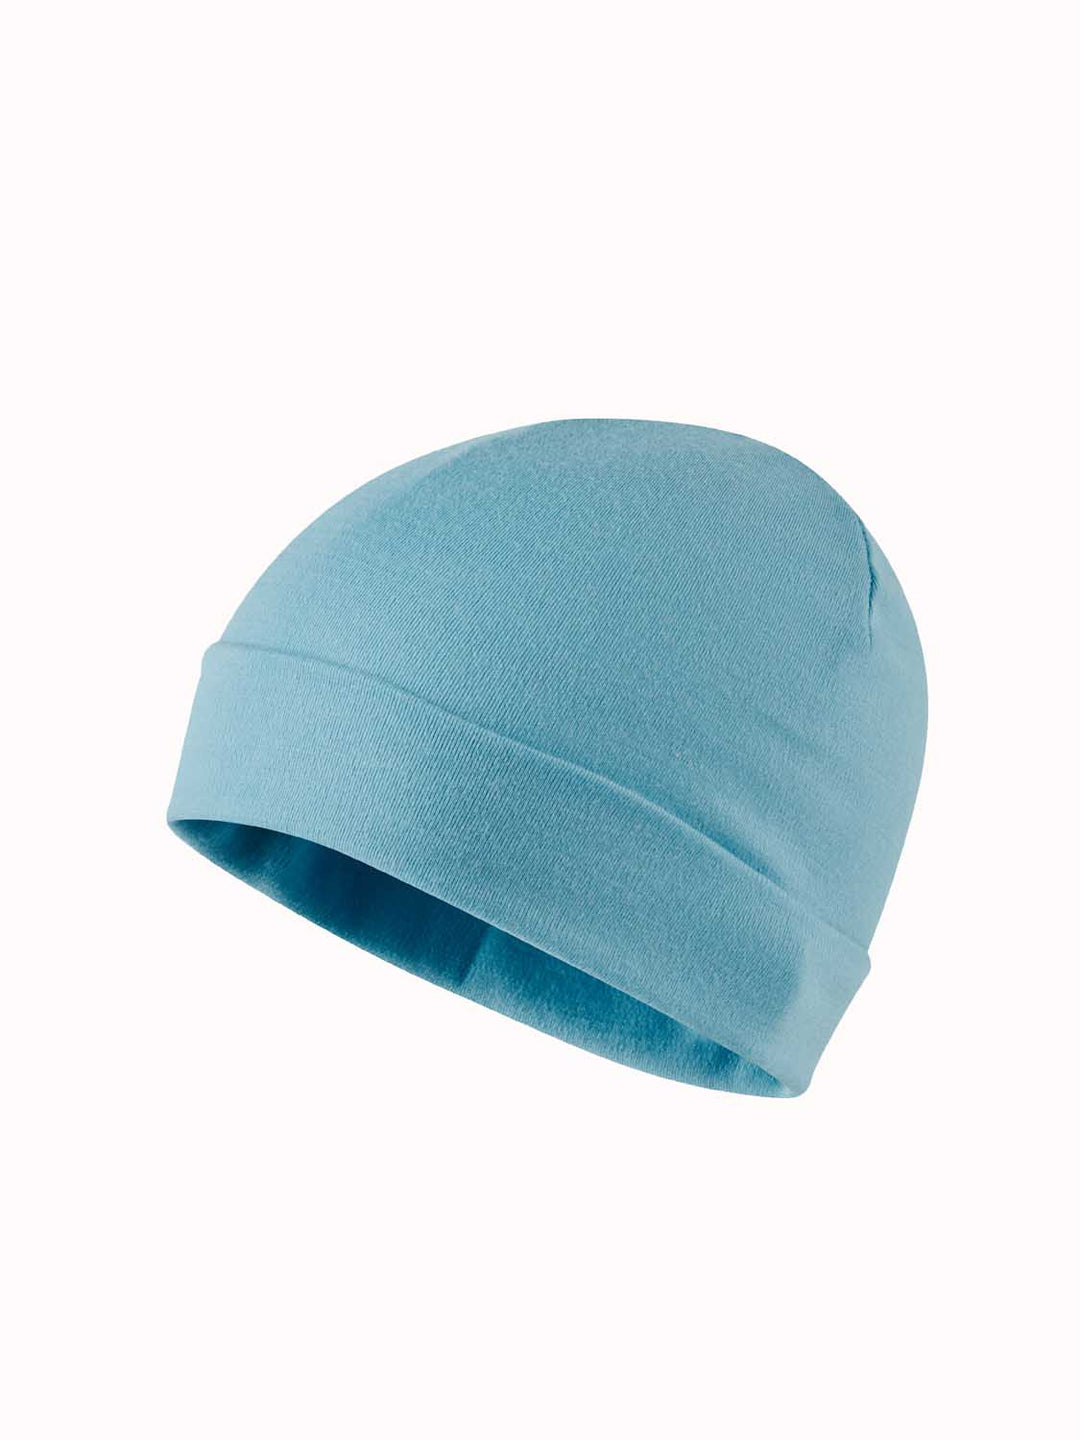 Merino beanie hat blue #colour_raindrop